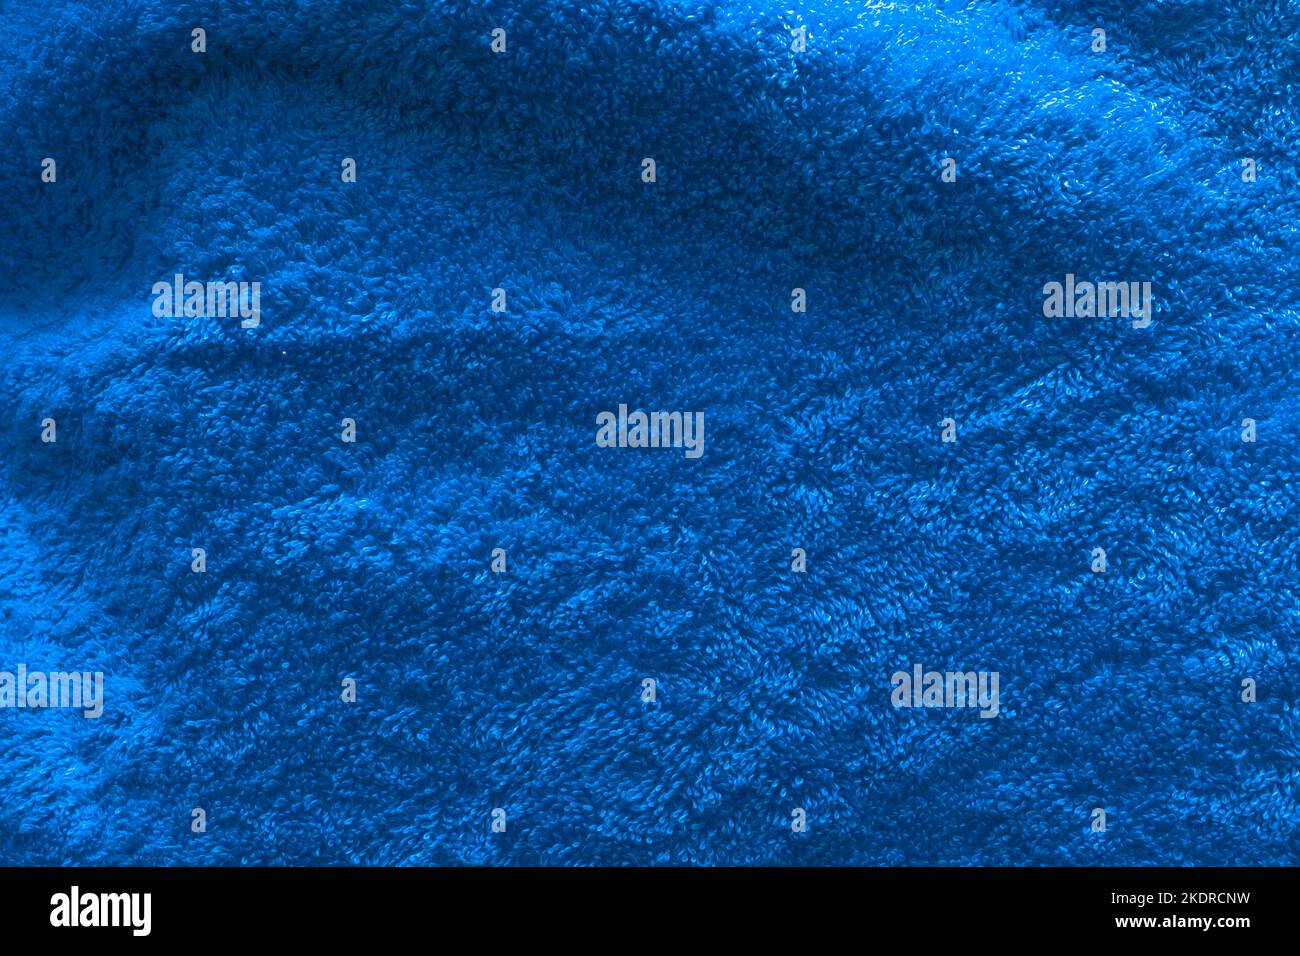 Piel azul lana textura fondo azul marino patrón cabello suave suave suave índigo abstracto animal. Foto de stock